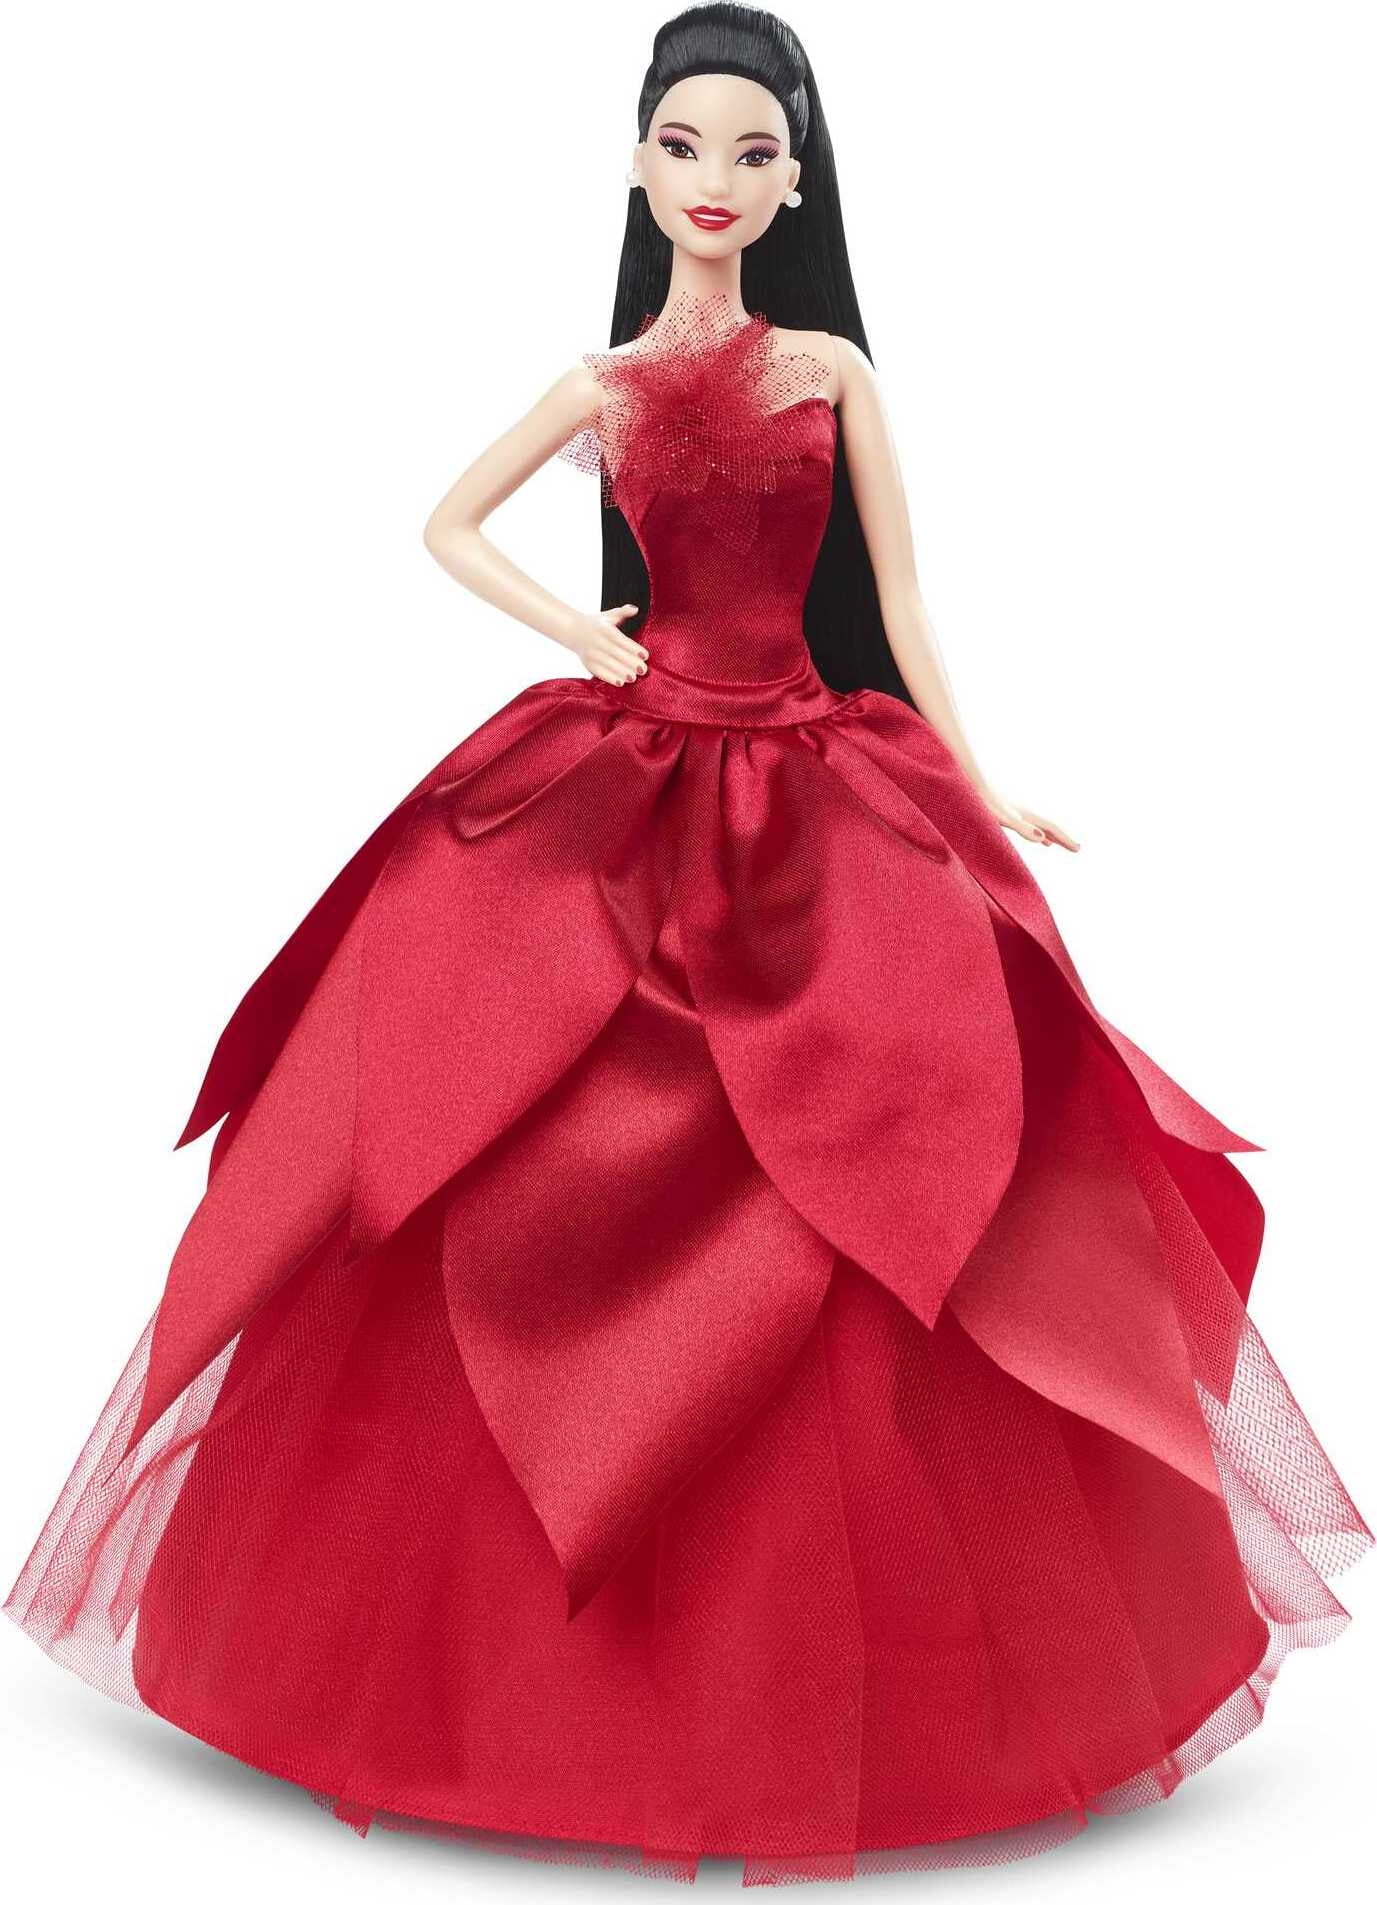 Voorrecht Birma Kast Barbie Doll, Barbie Signature 2022 Holiday Doll, Black Hair - Walmart.com